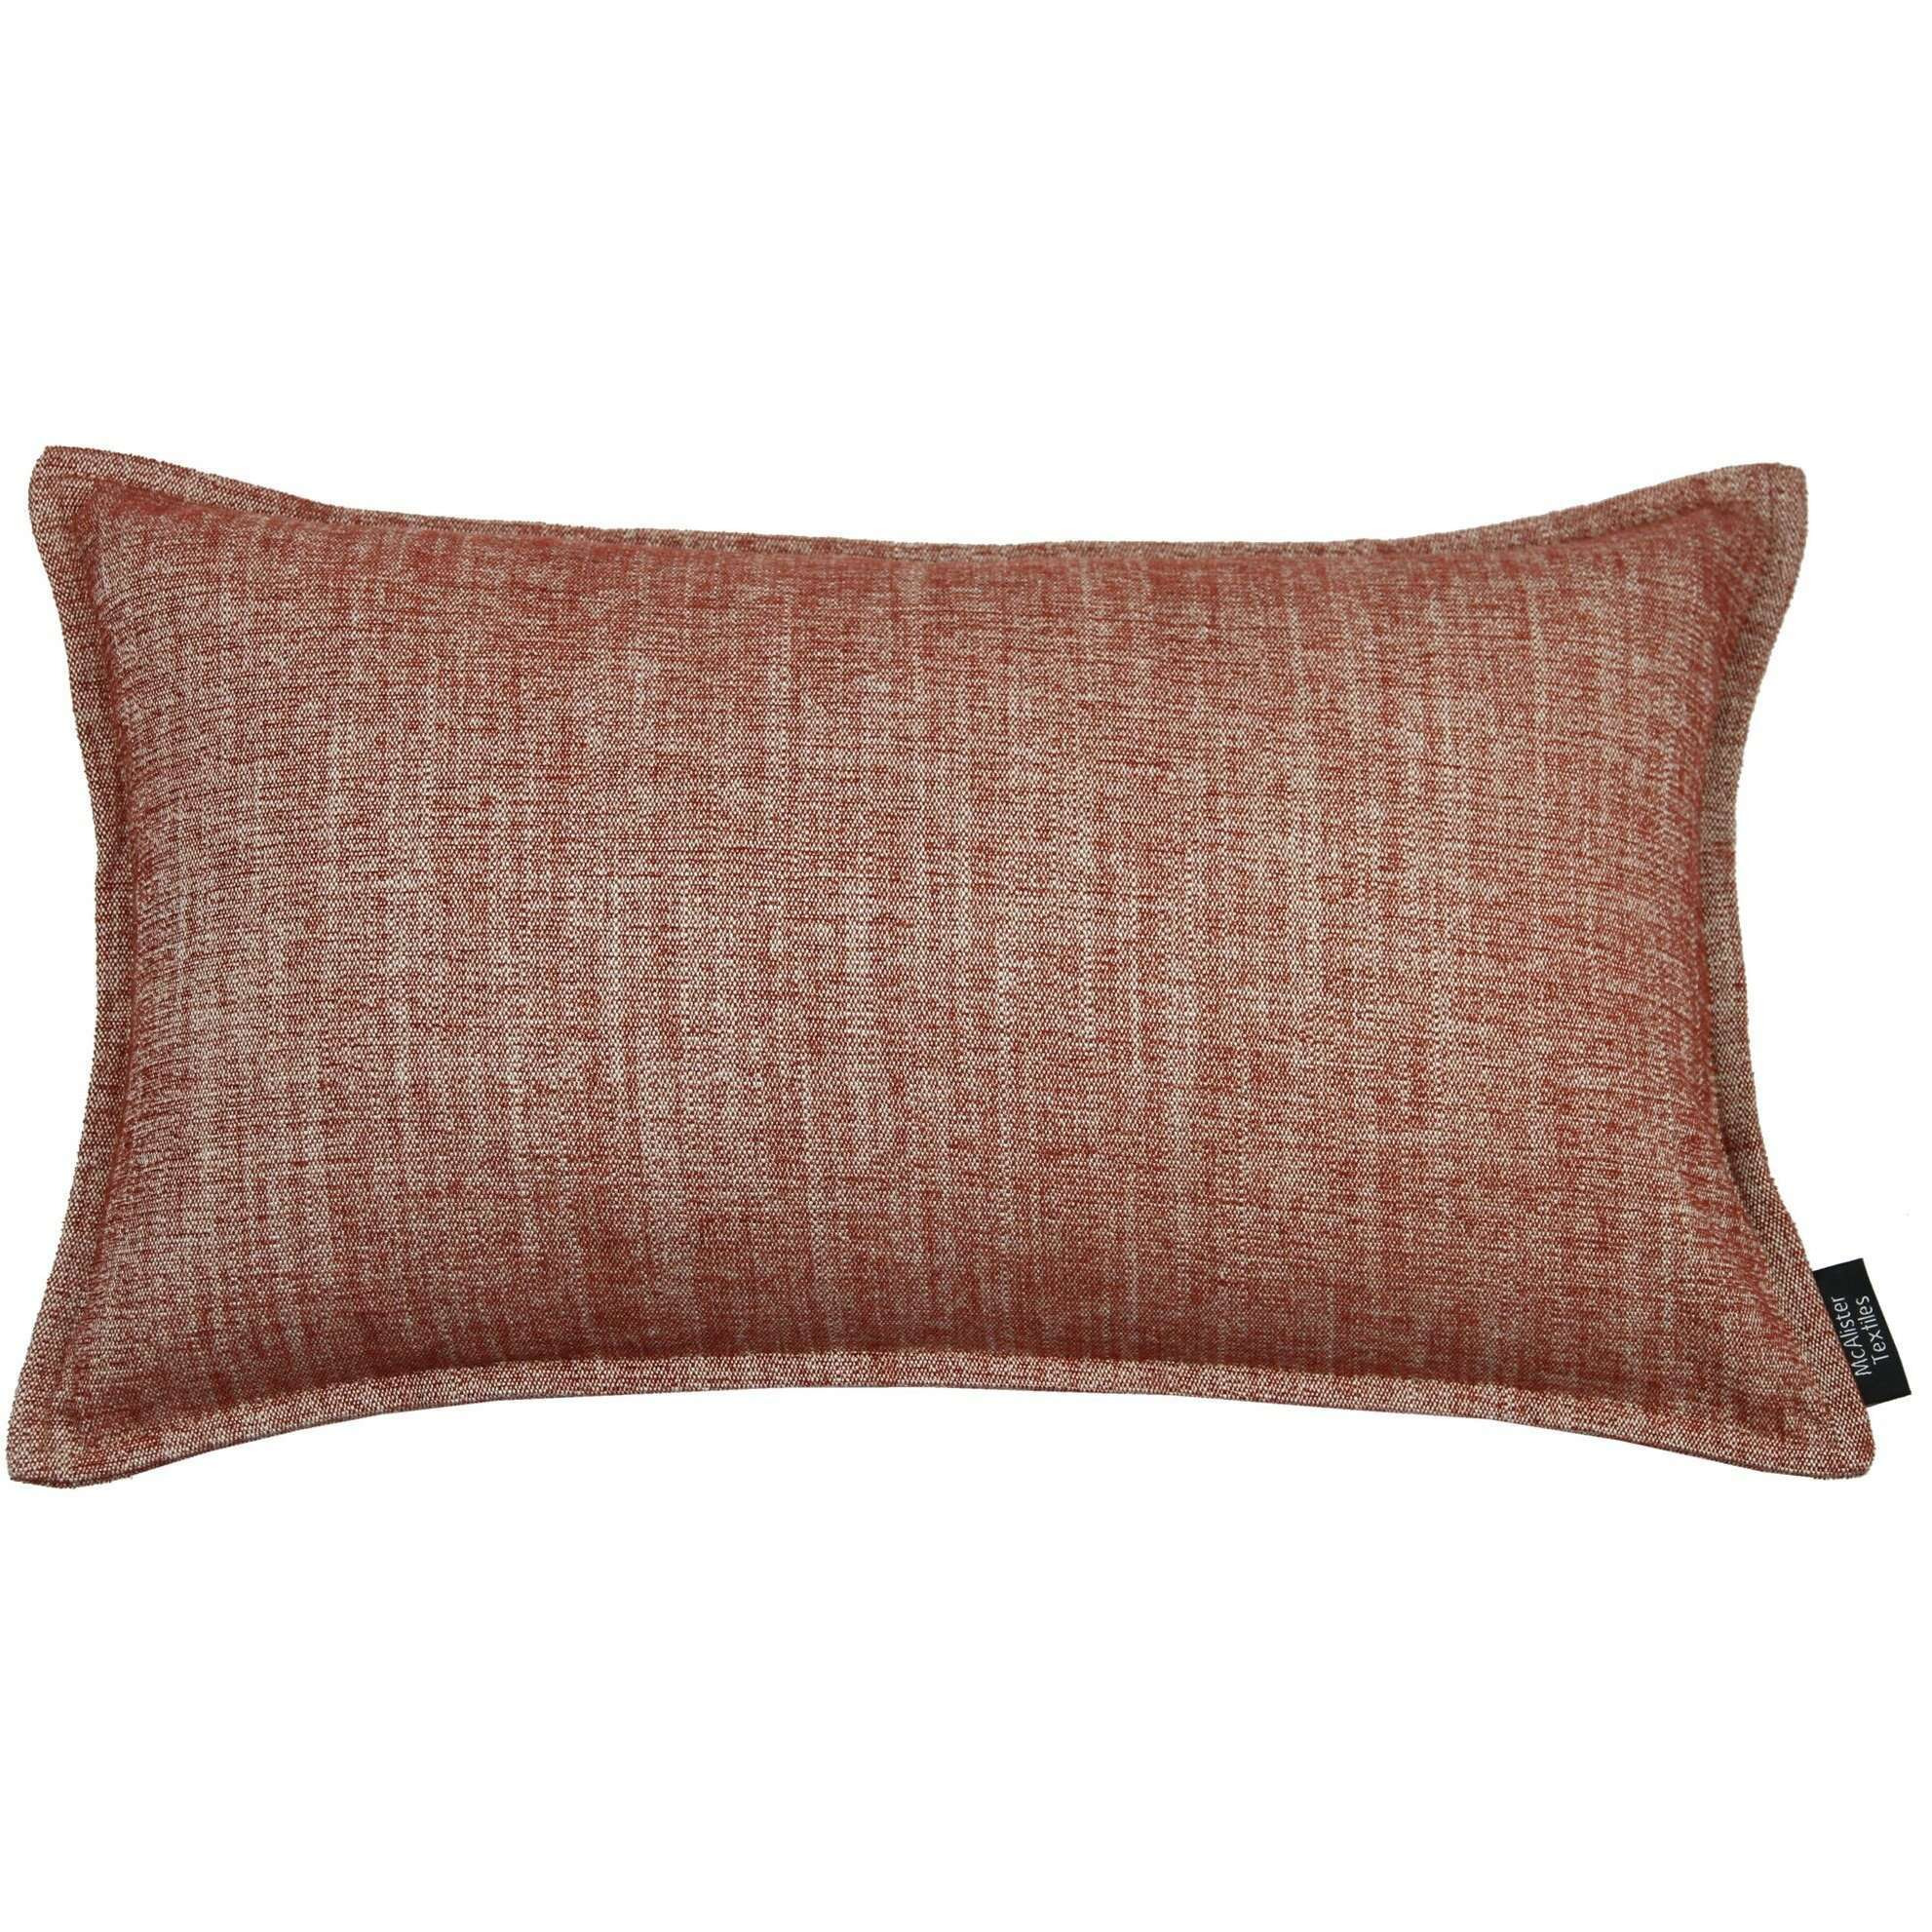 Rhumba Burnt Orange Pillow, Cover Only / 50cm x 30cm